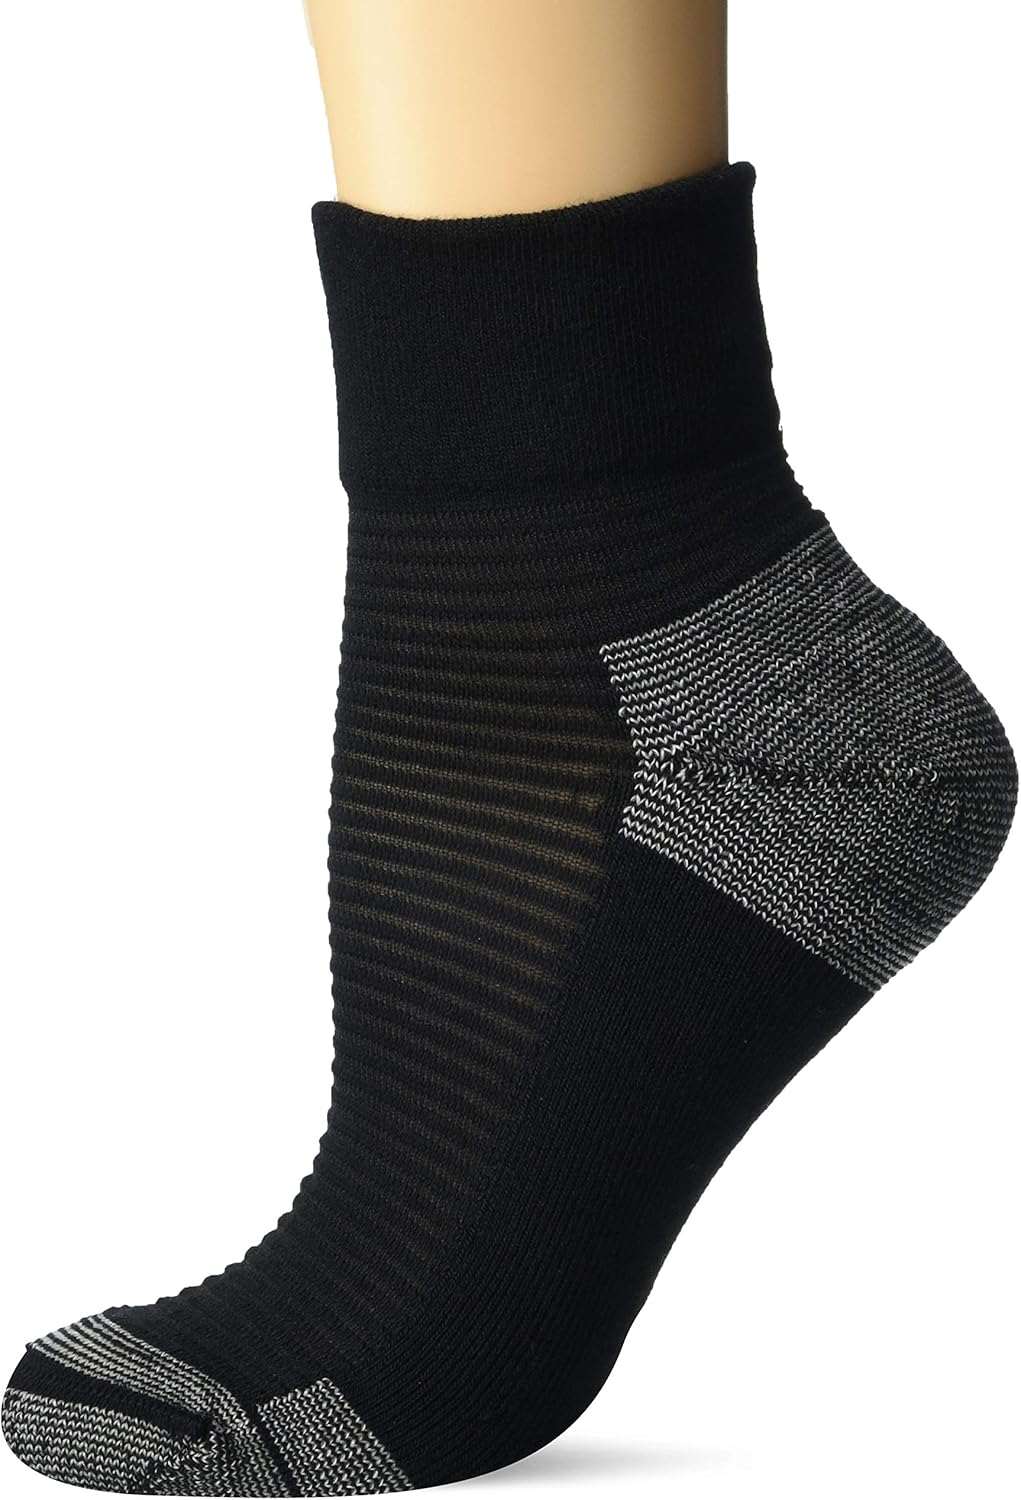 Dr. Scholl's Women's American Lifestyle Advanced Relief Blister Guard Ankle Socks 2 Pair, Black, Shoe Size: 4-10 DSW22184Q2U2001